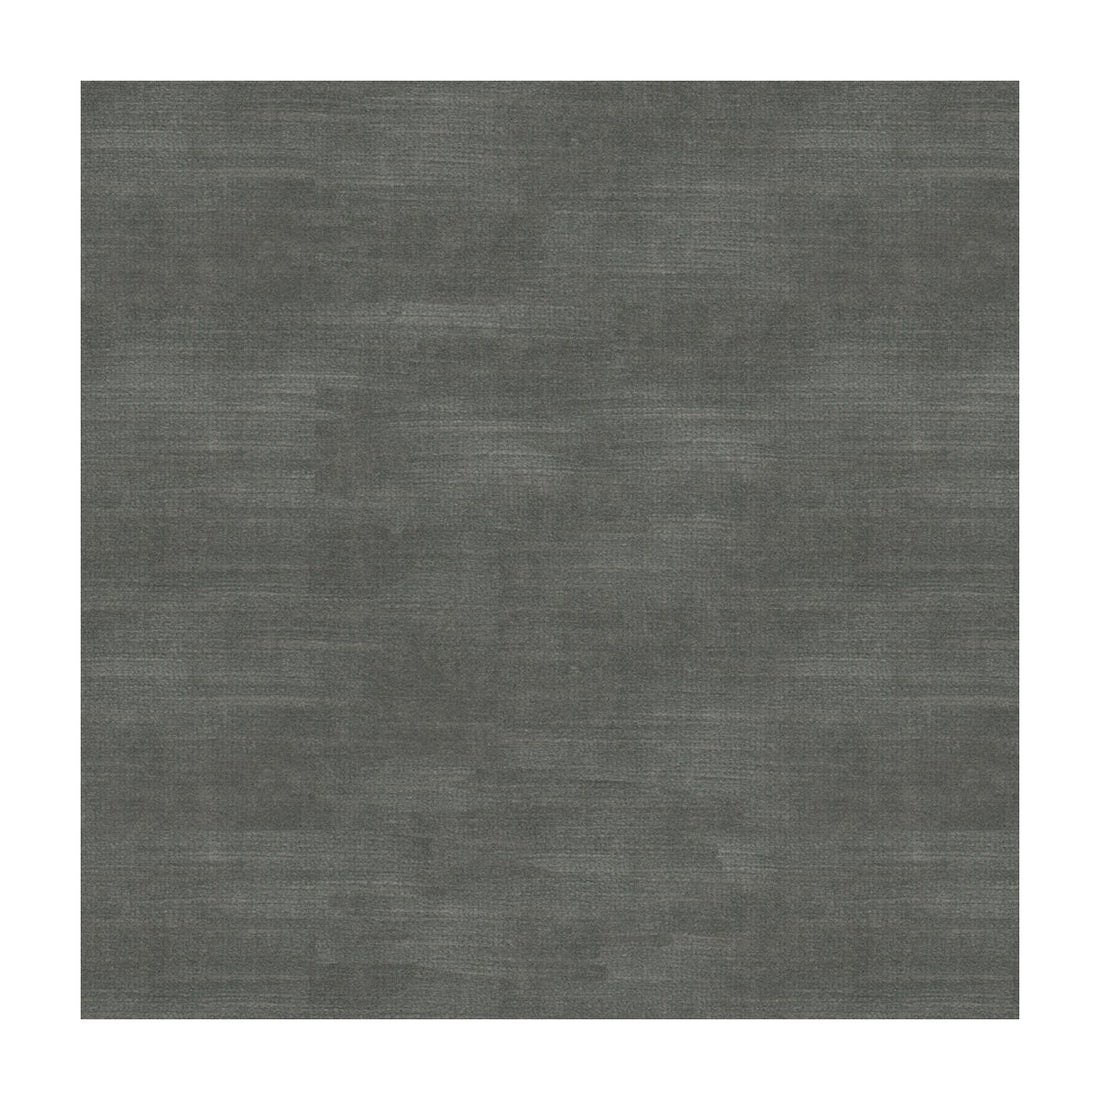 Lazare Velvet fabric in forest color - pattern 8016103.35.0 - by Brunschwig &amp; Fils